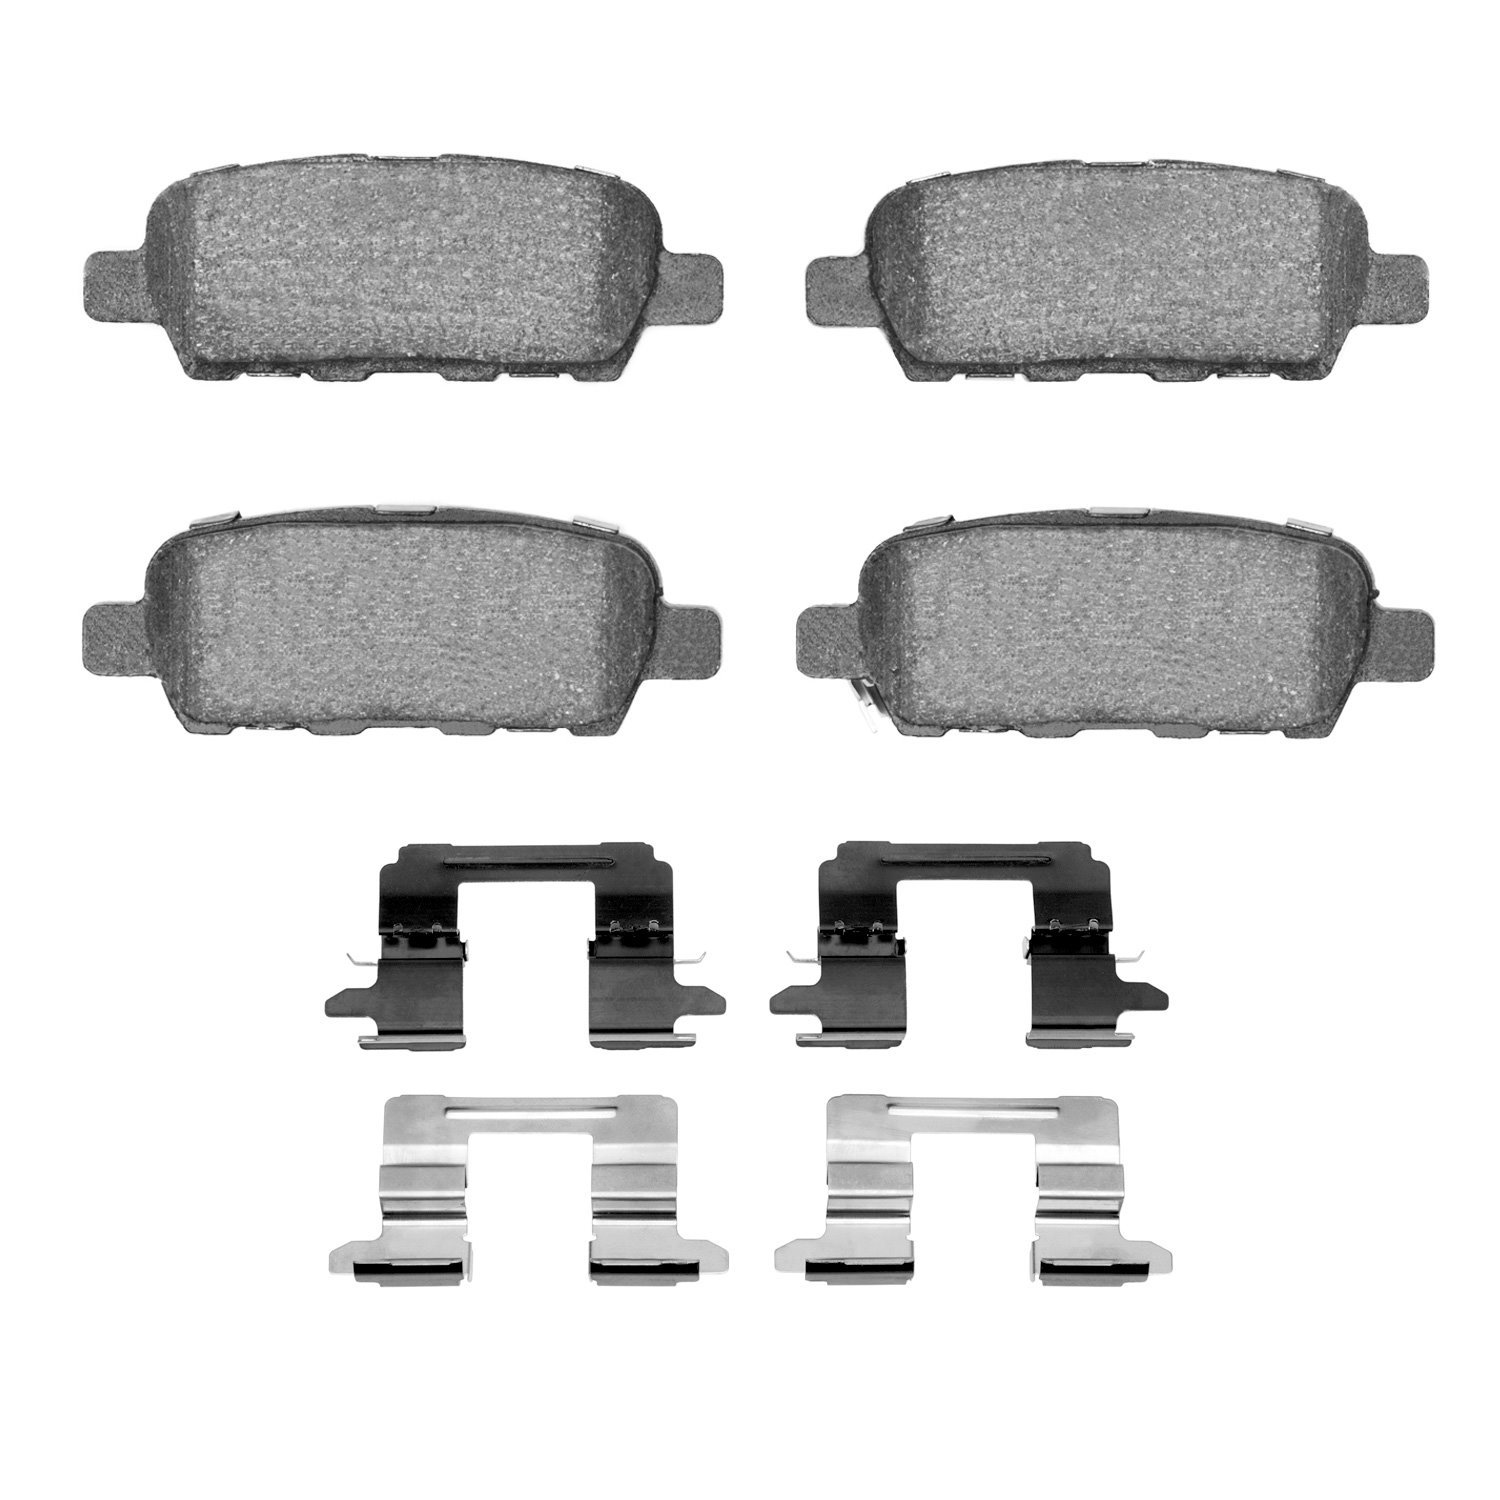 1551-0905-03 5000 Advanced Ceramic Brake Pads & Hardware Kit, Fits Select Multiple Makes/Models, Position: Rear